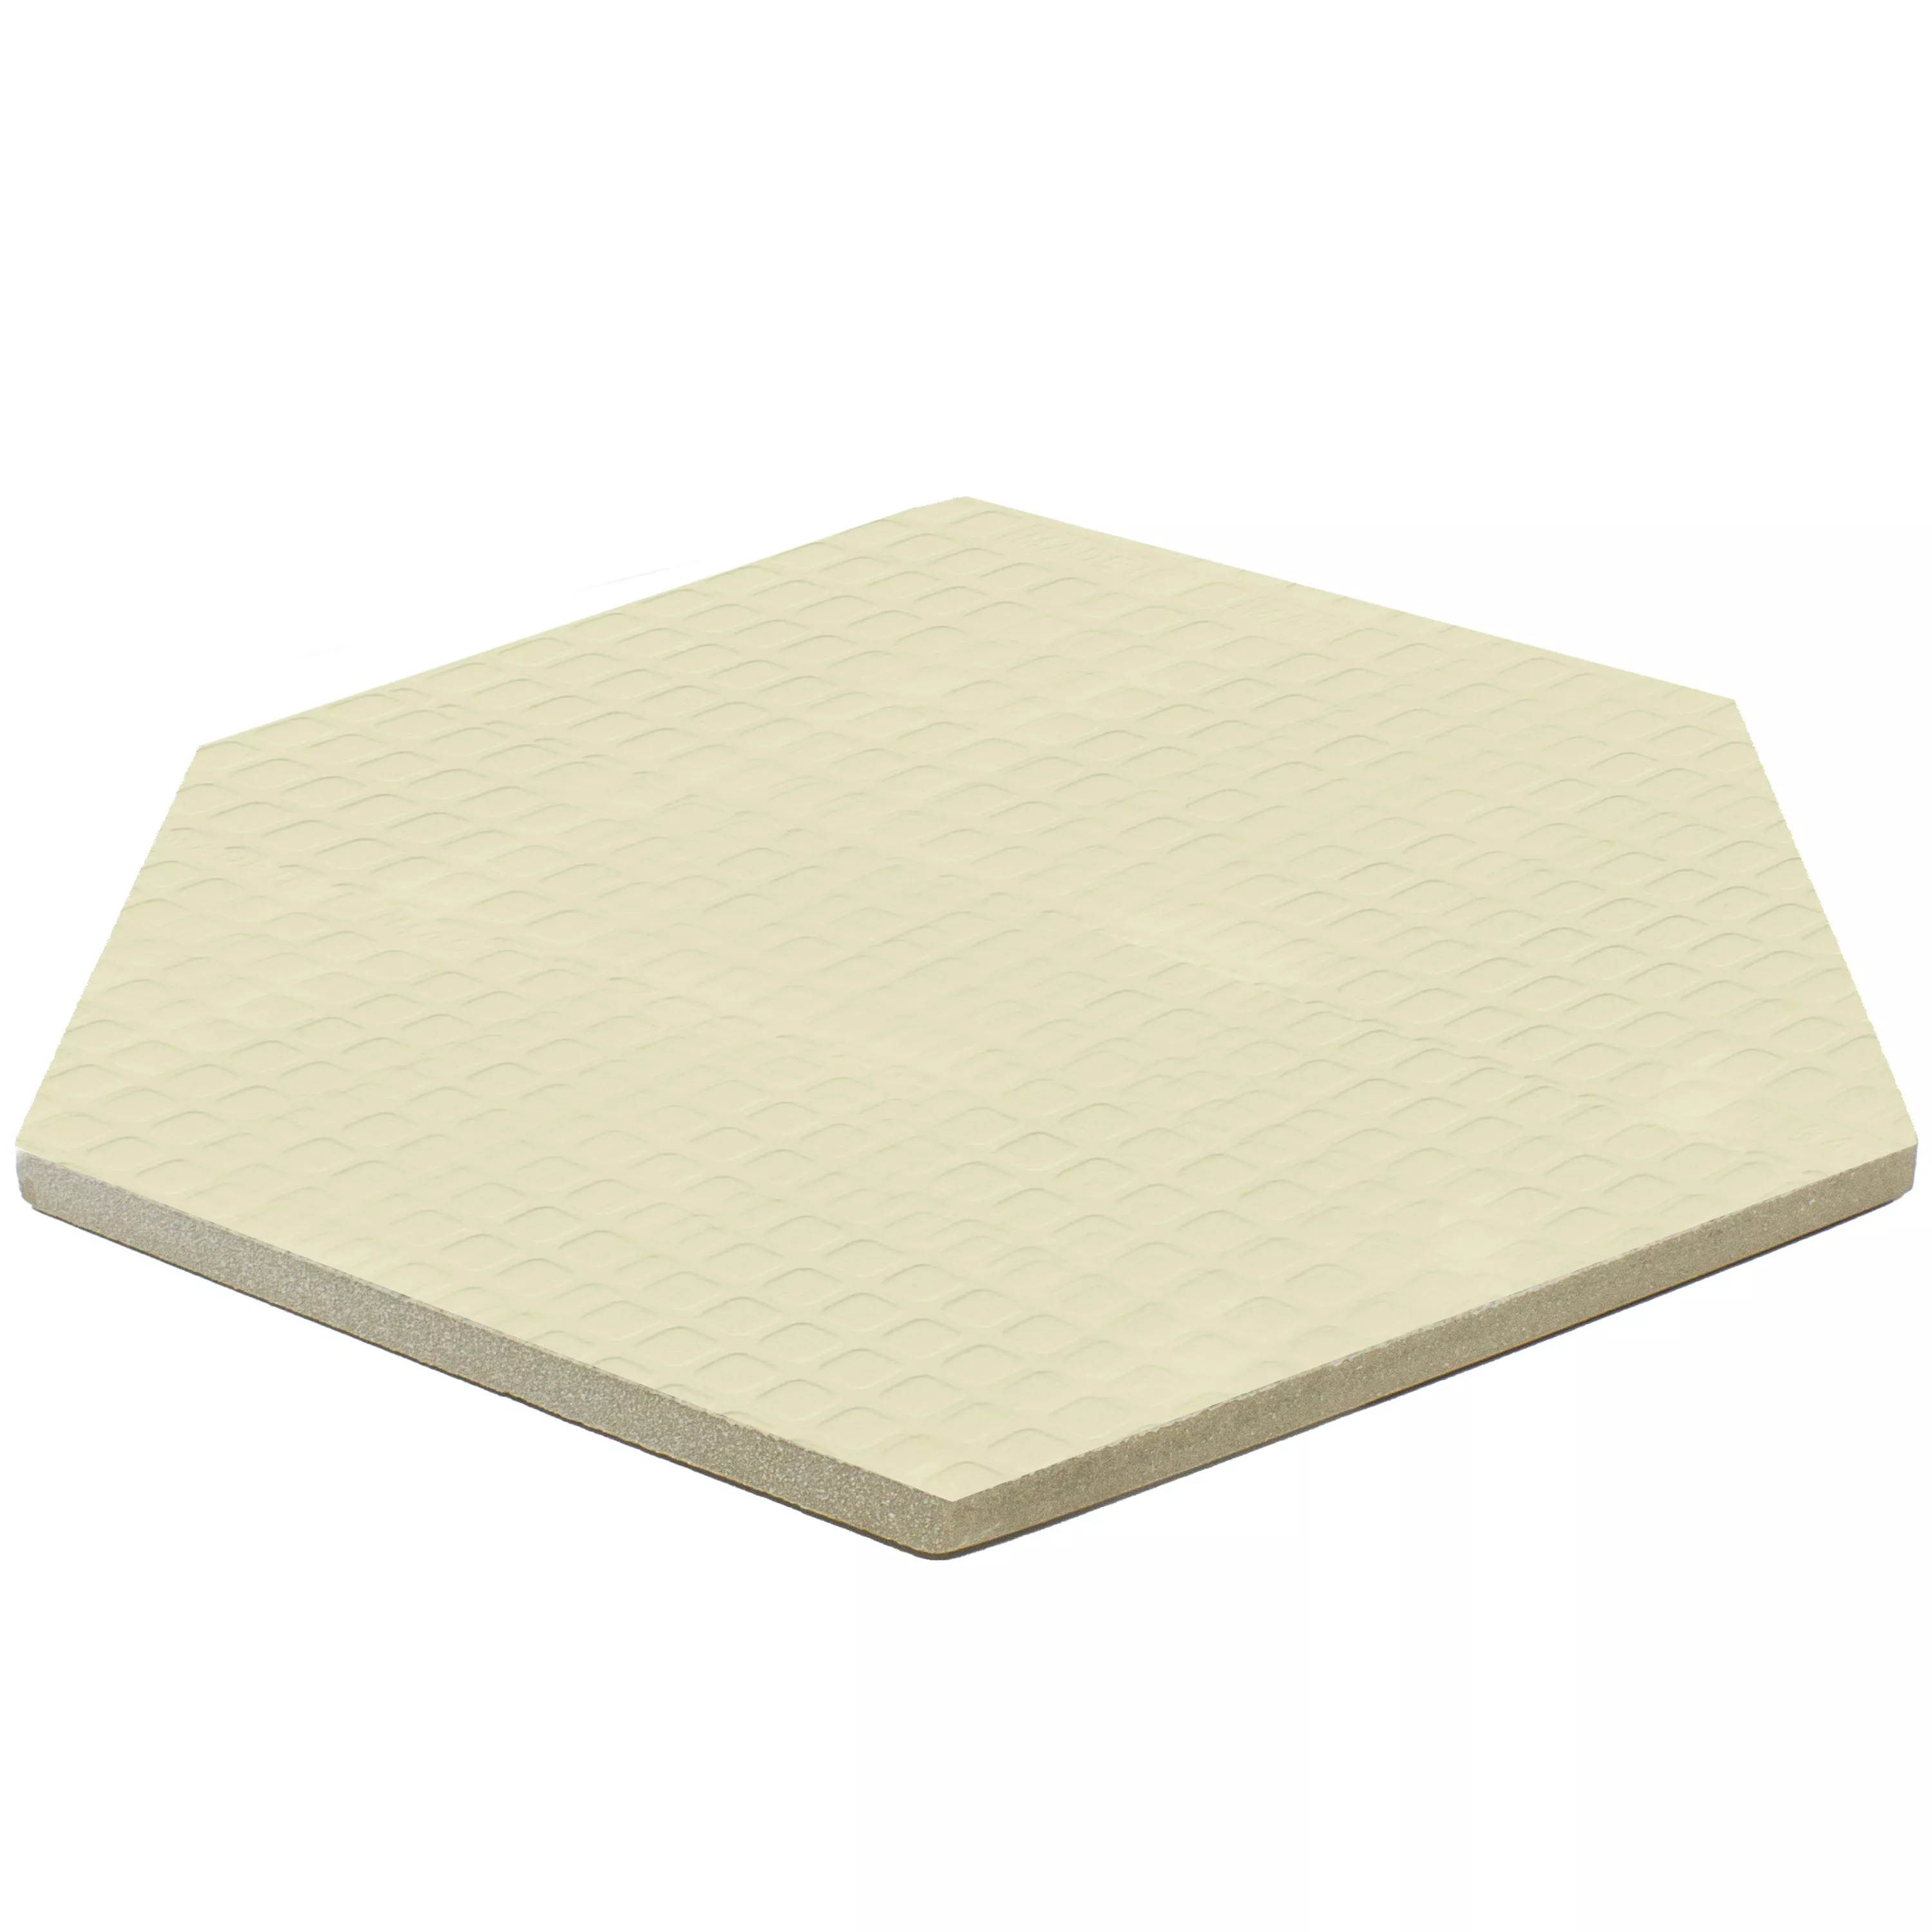 Sample Floor Tiles Arosa Mat Hexagon Braun17,3x15cm